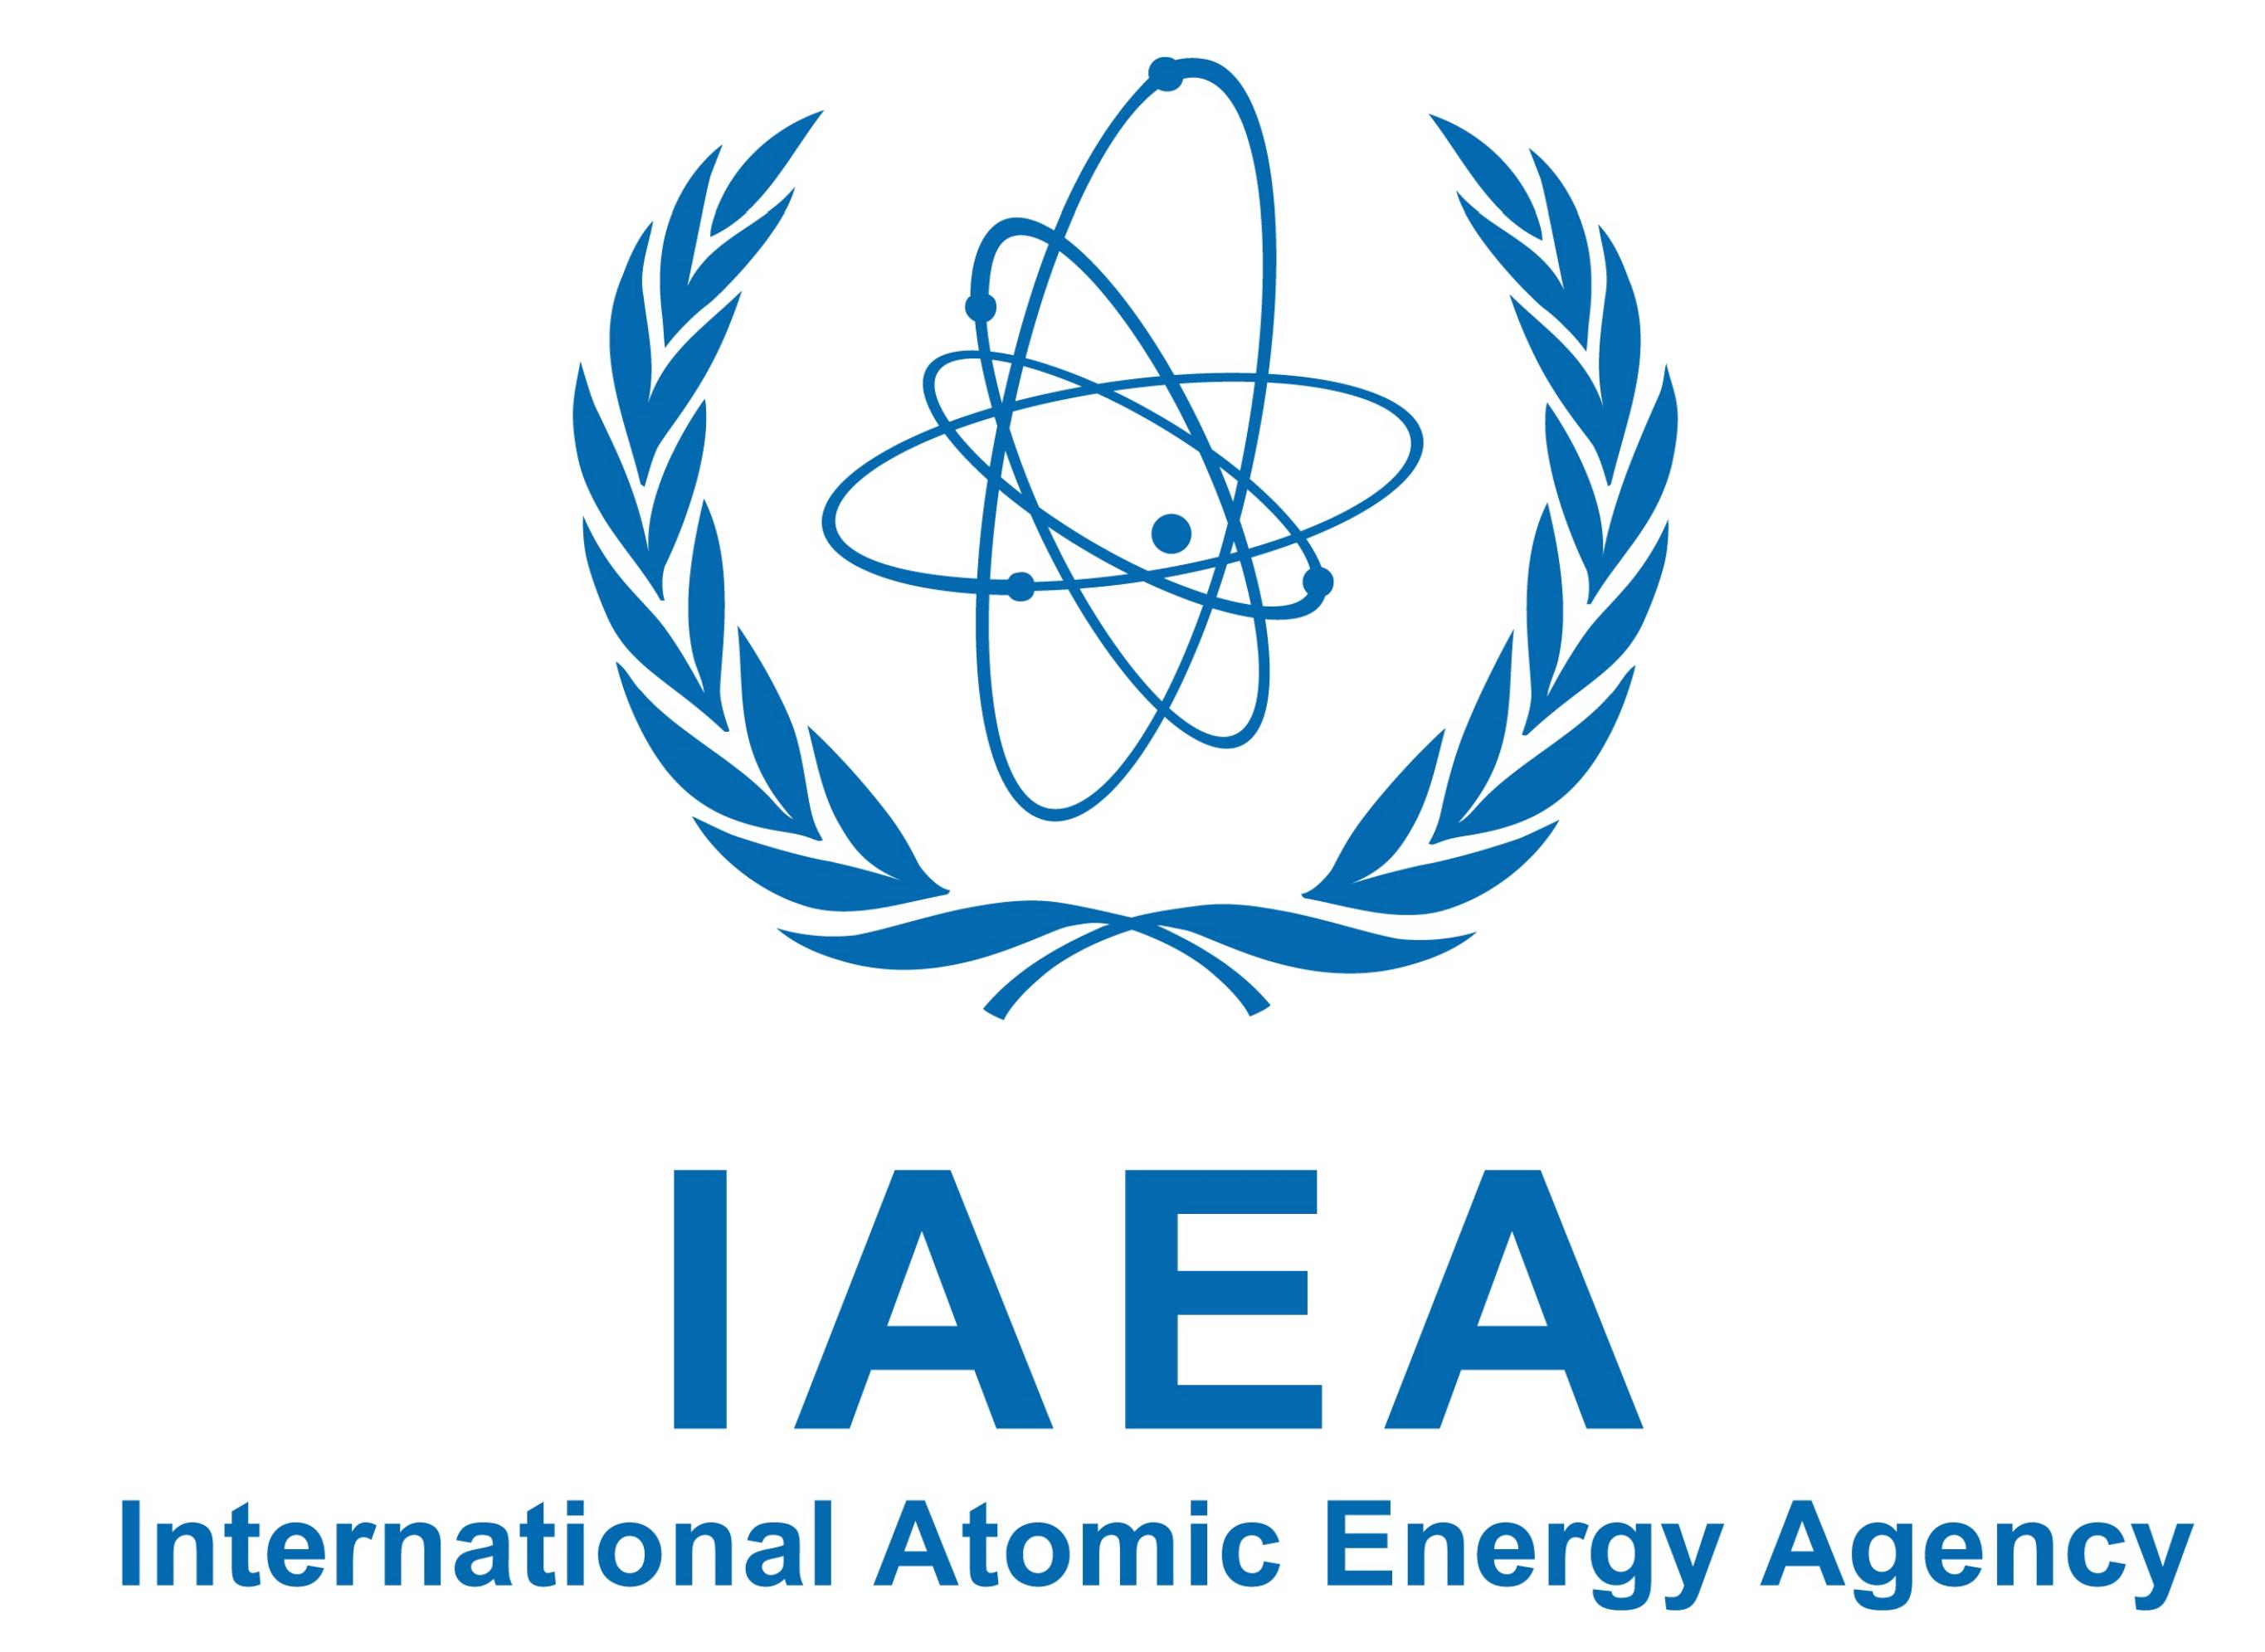 Kazakh Energy Minister Praises IAEA, Notes Kazakhstan’s Global